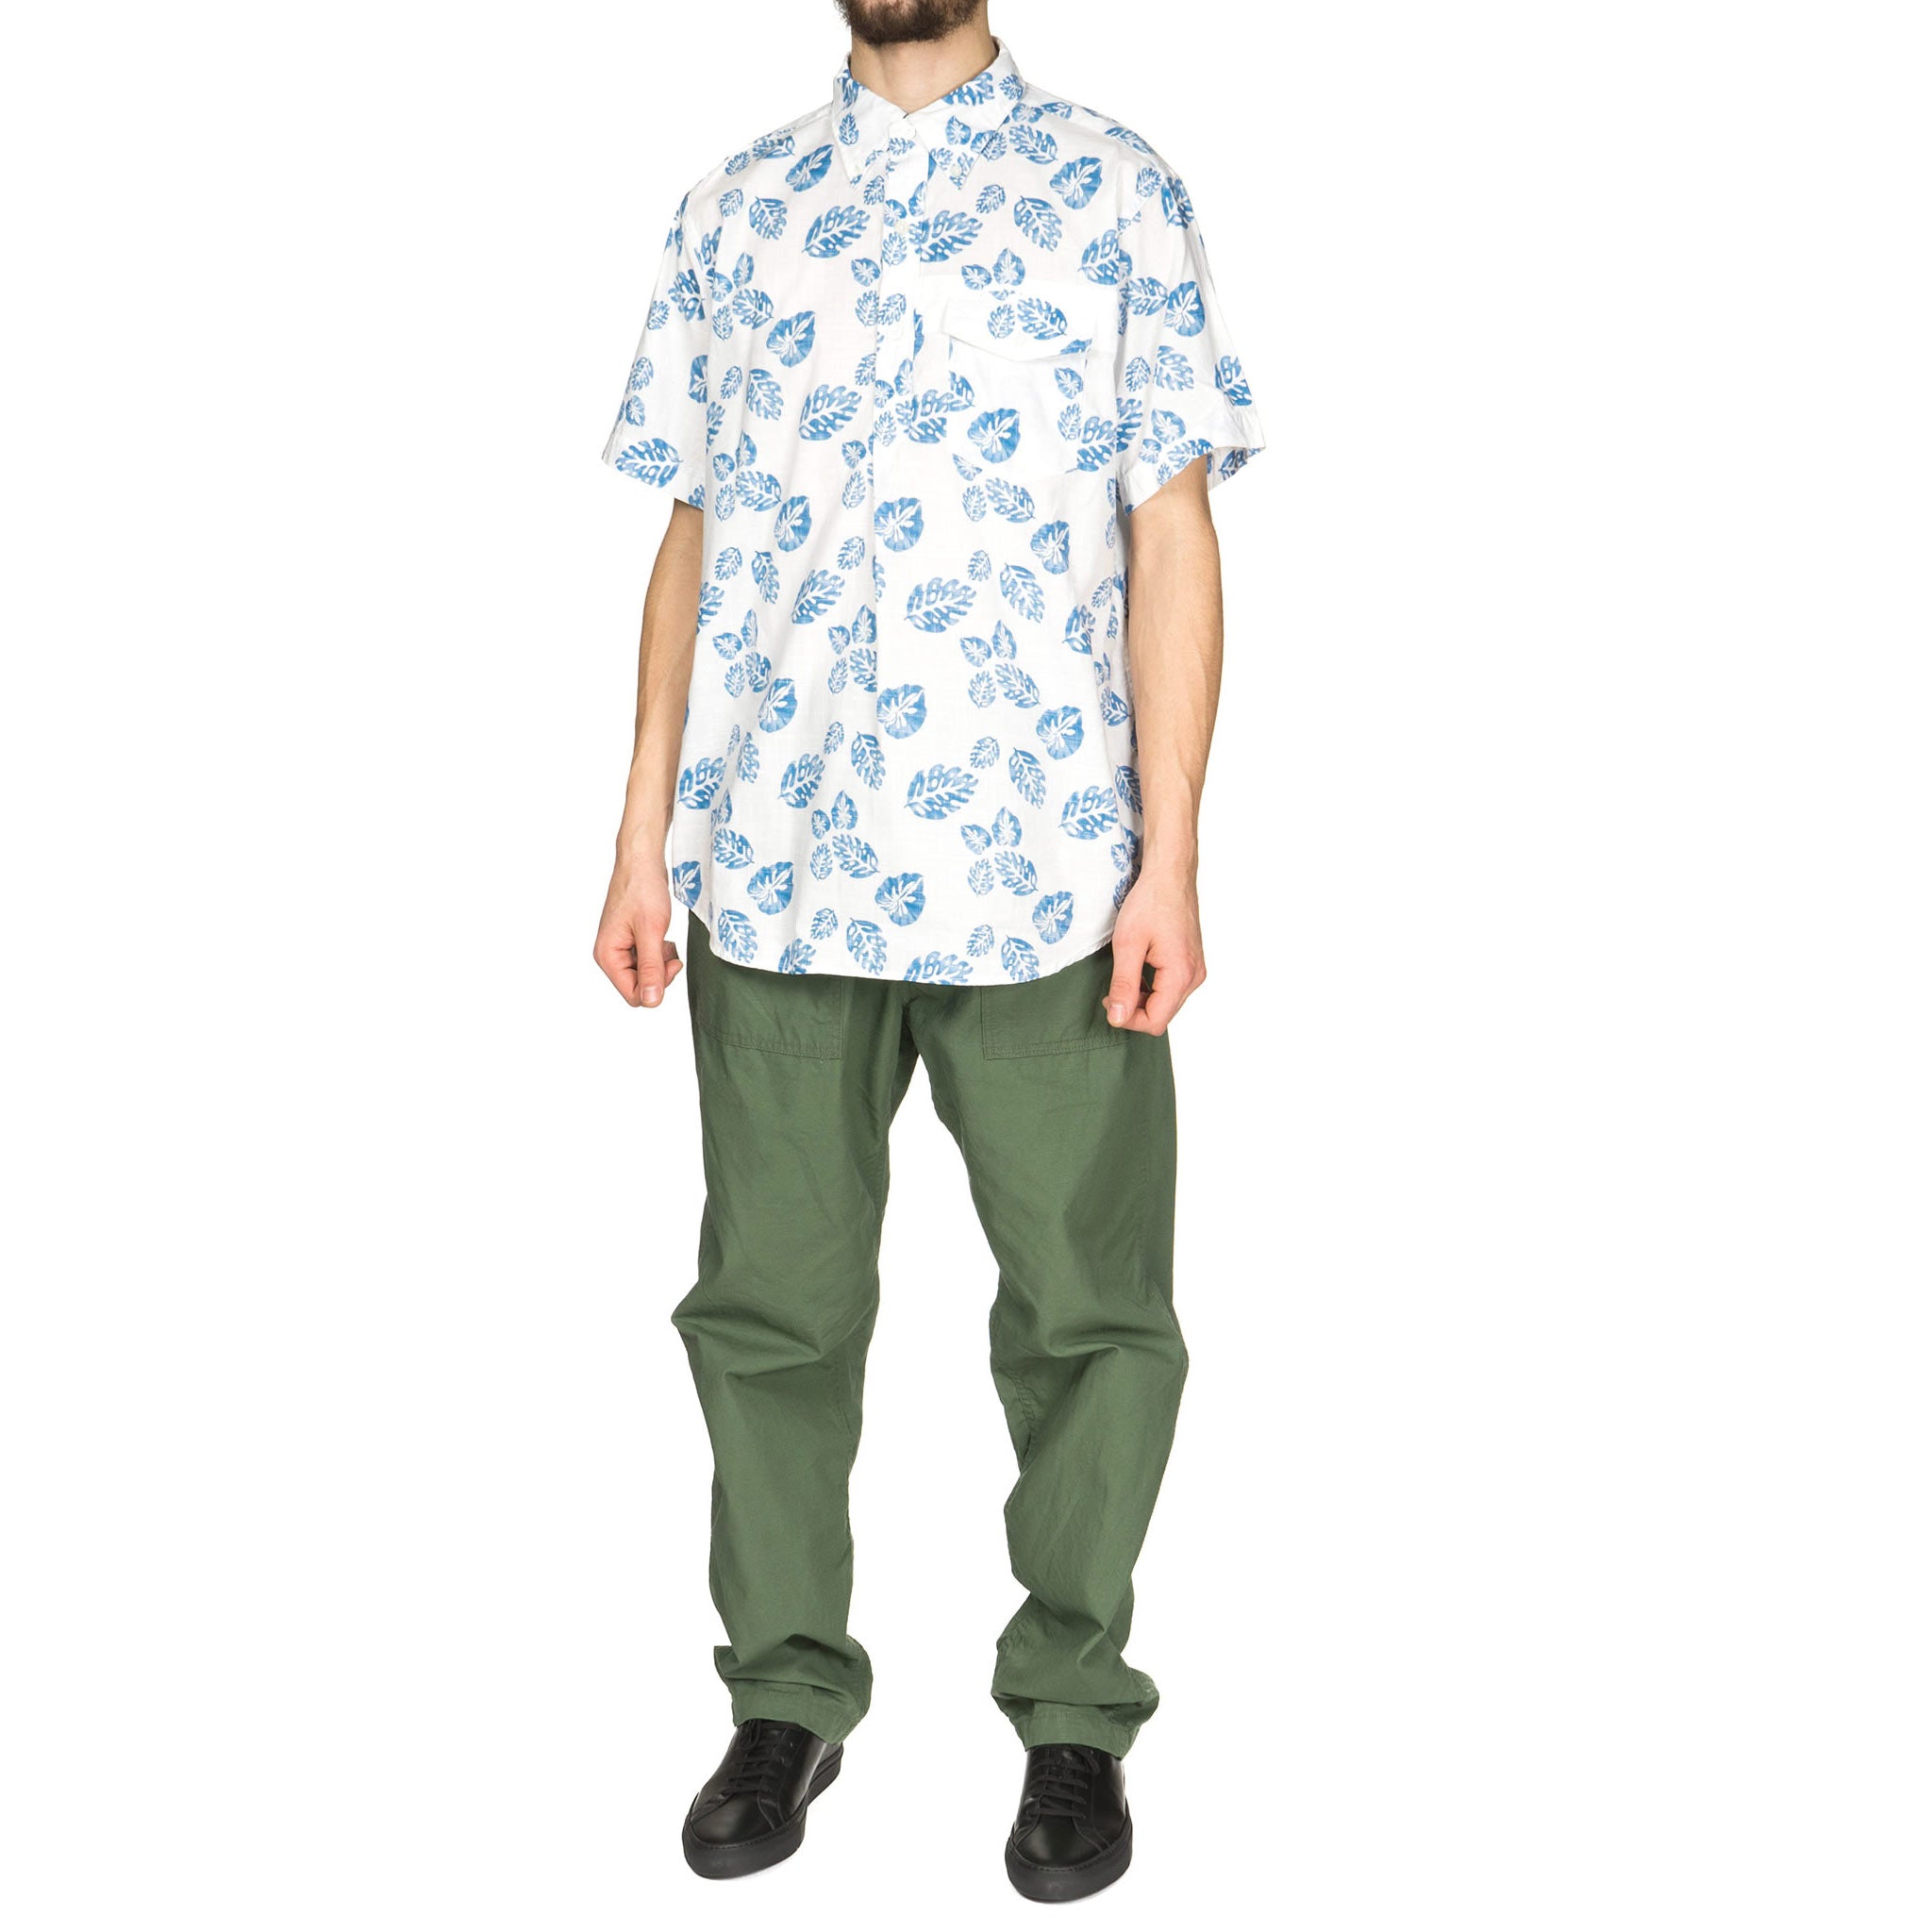 Engineered-Garments-Pop-Over-BD-Shirt-Light-Weight-Big-Leaf-NAVY-2_2048x2048.jpg